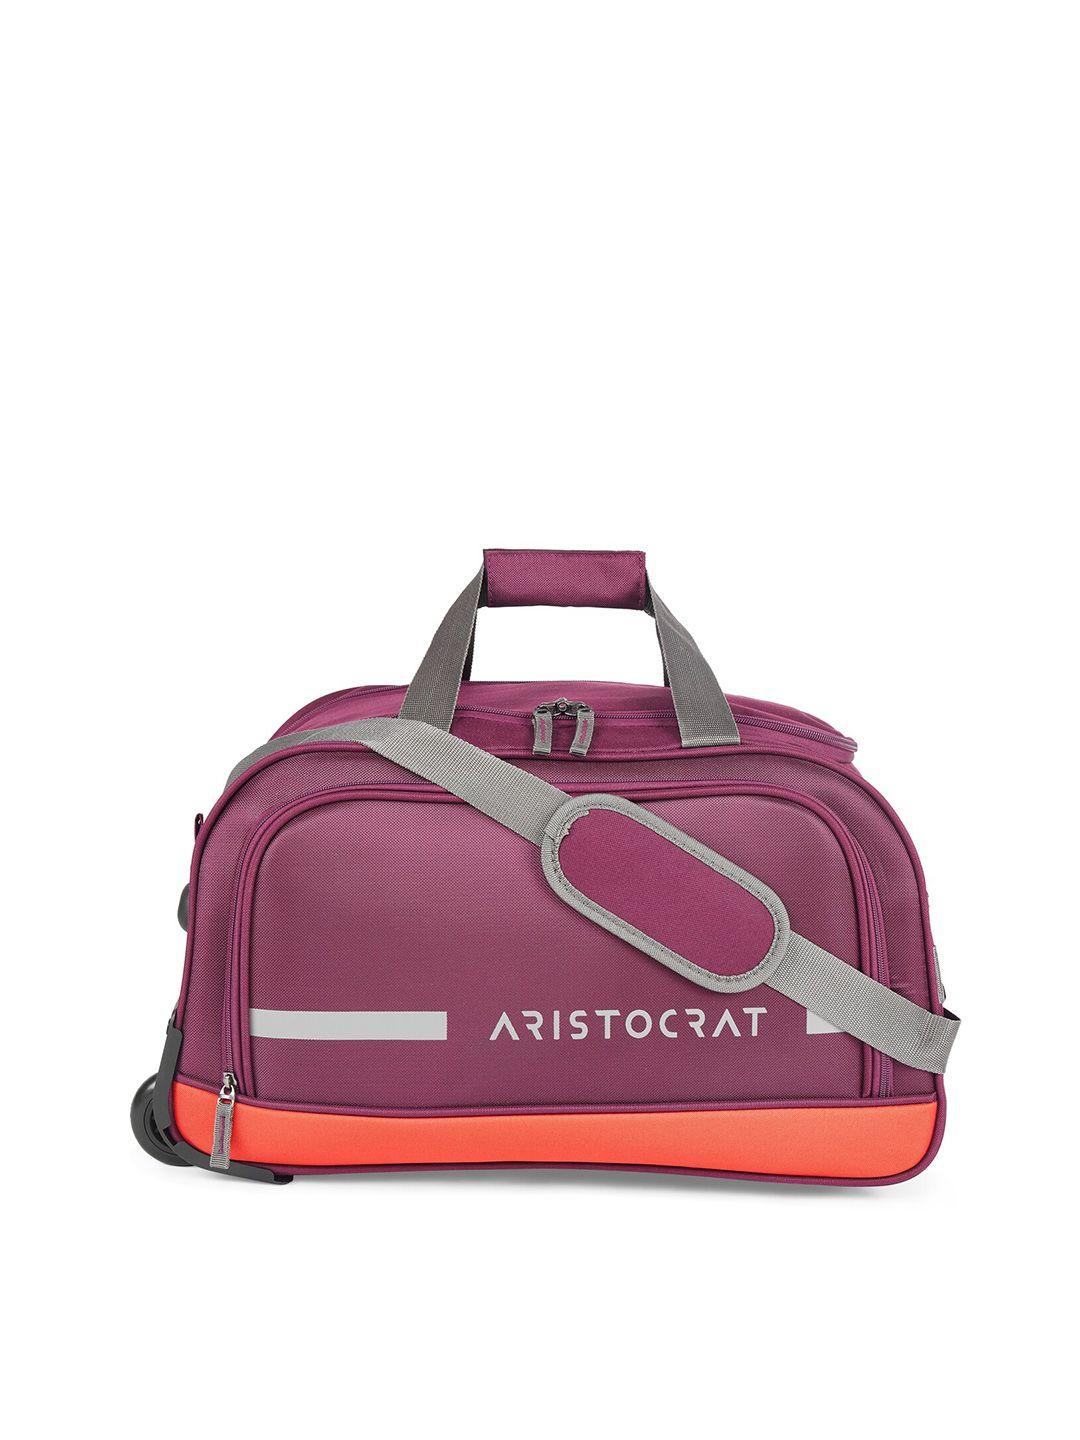 aristocrat travel duffel bag